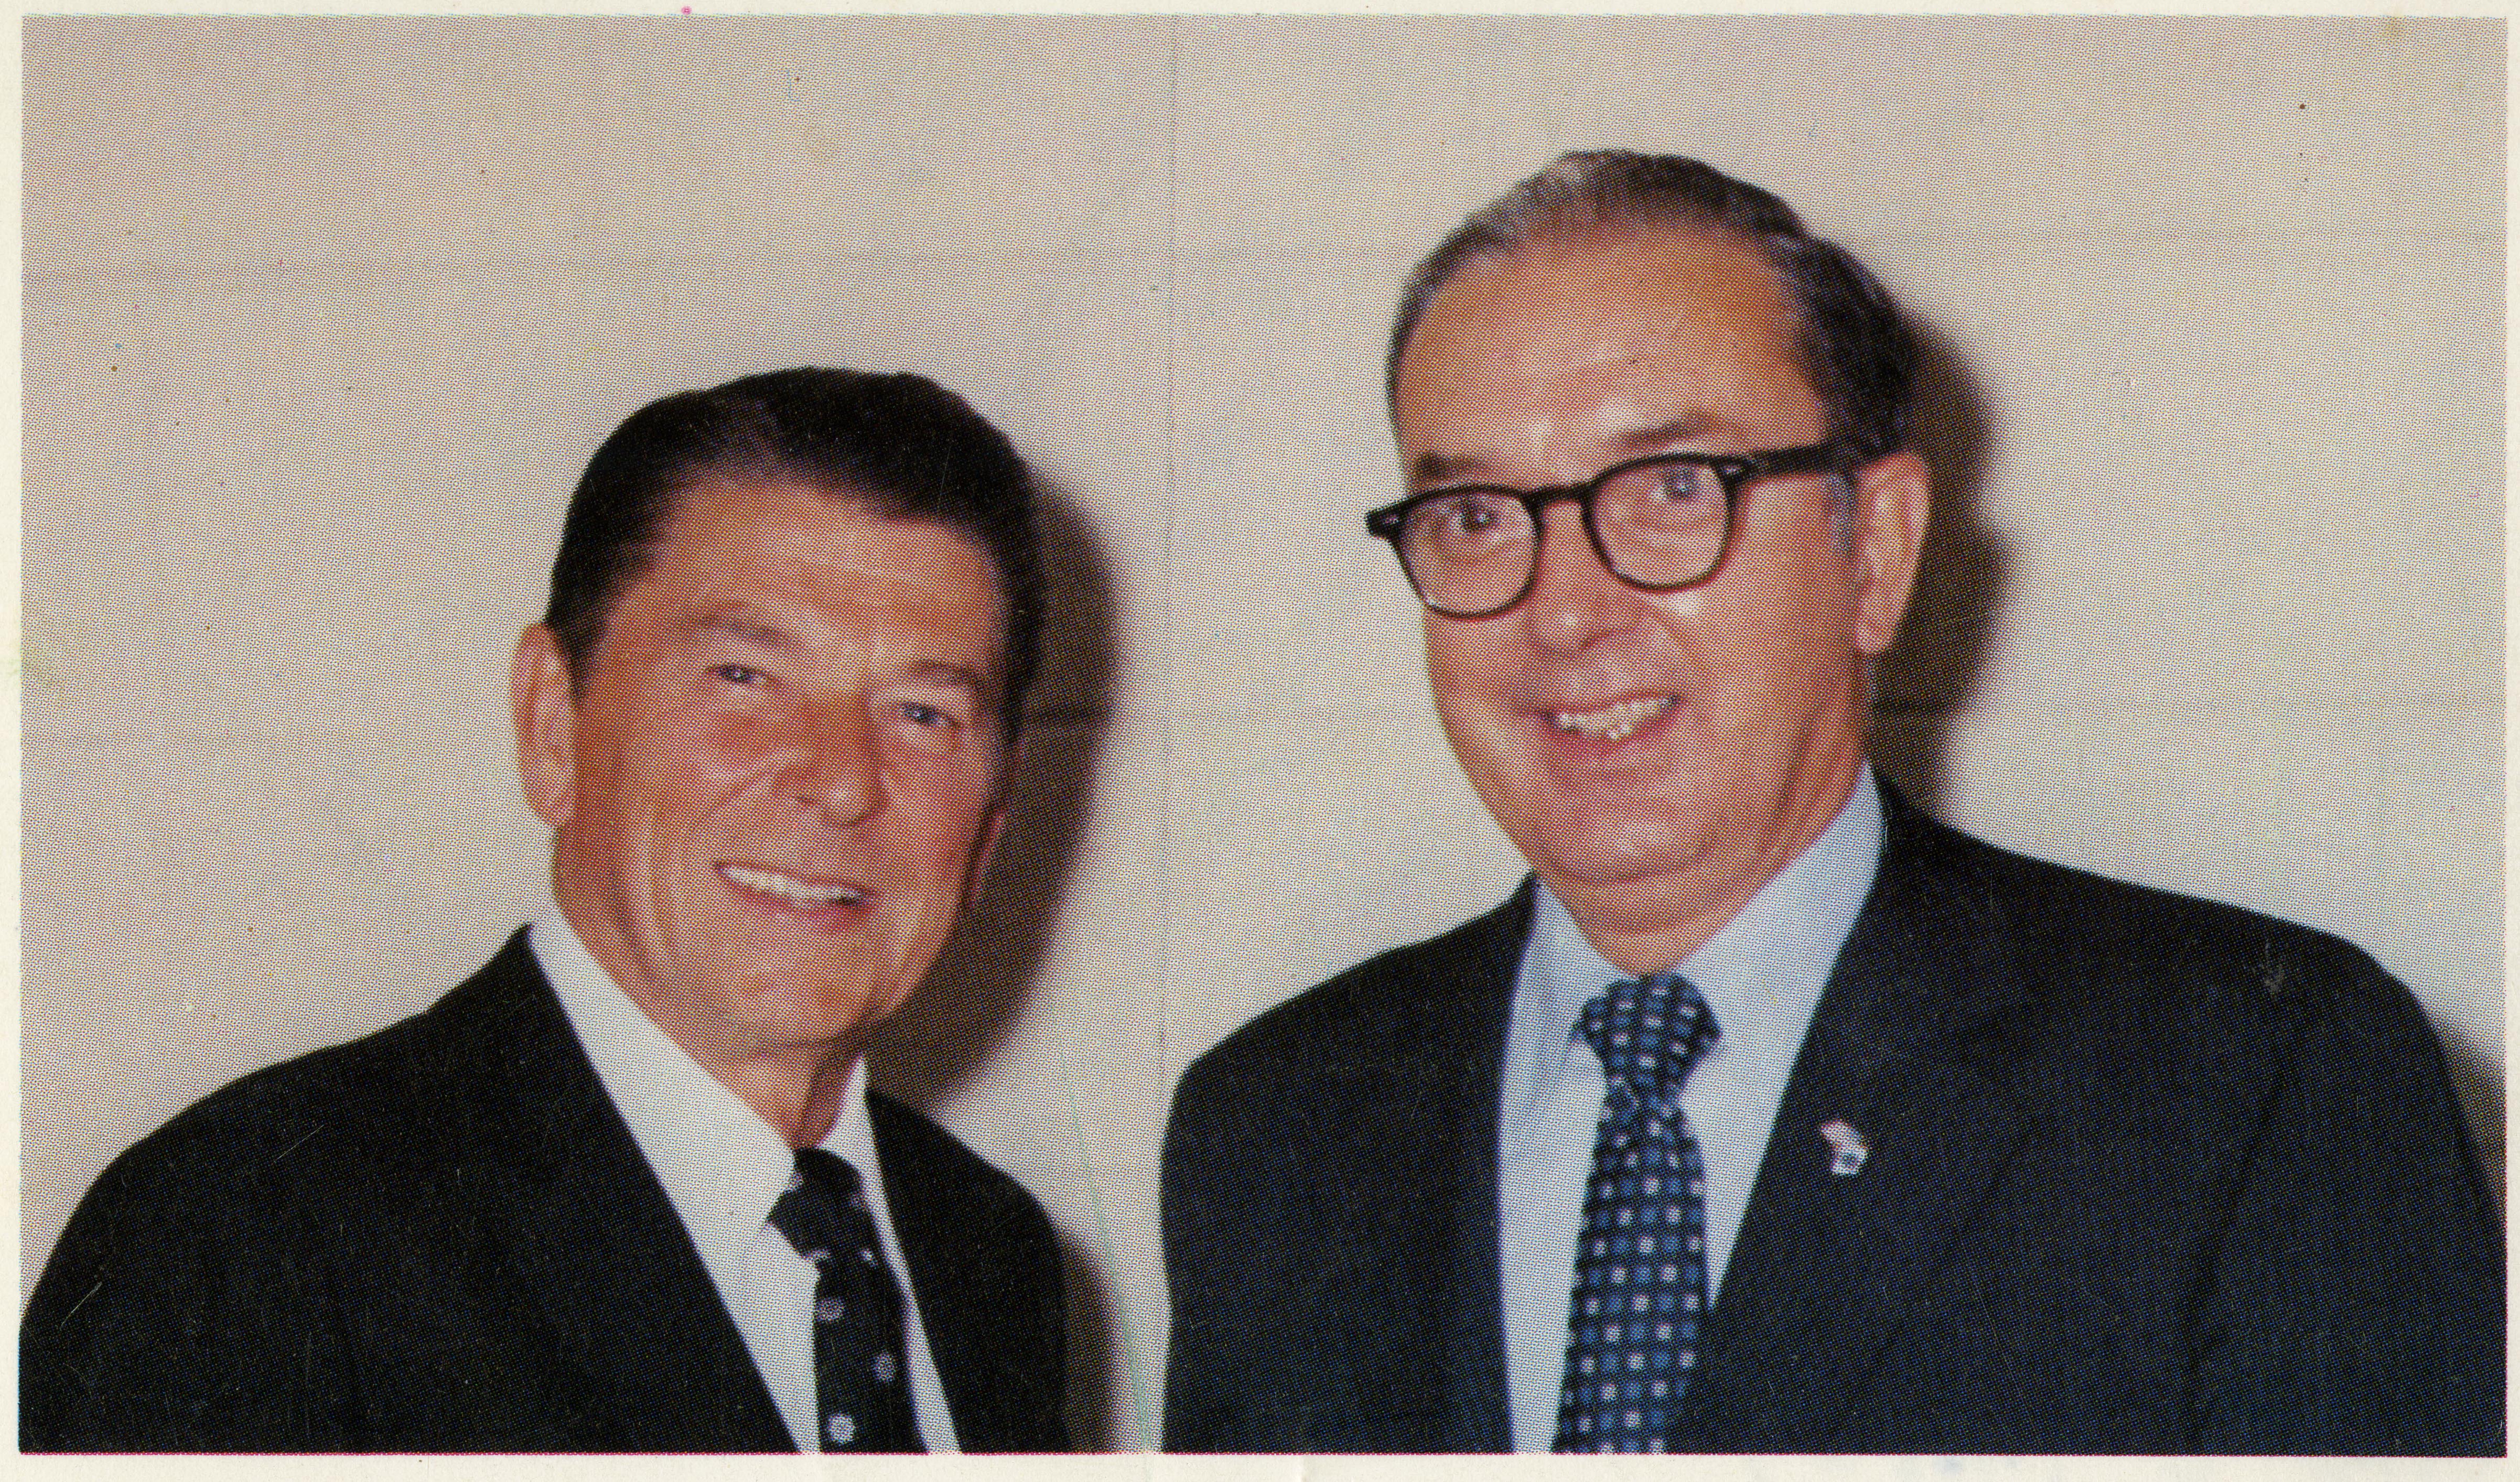 Ronald Reagan and Senator Jesse Helms during North Carolina Primary campaign